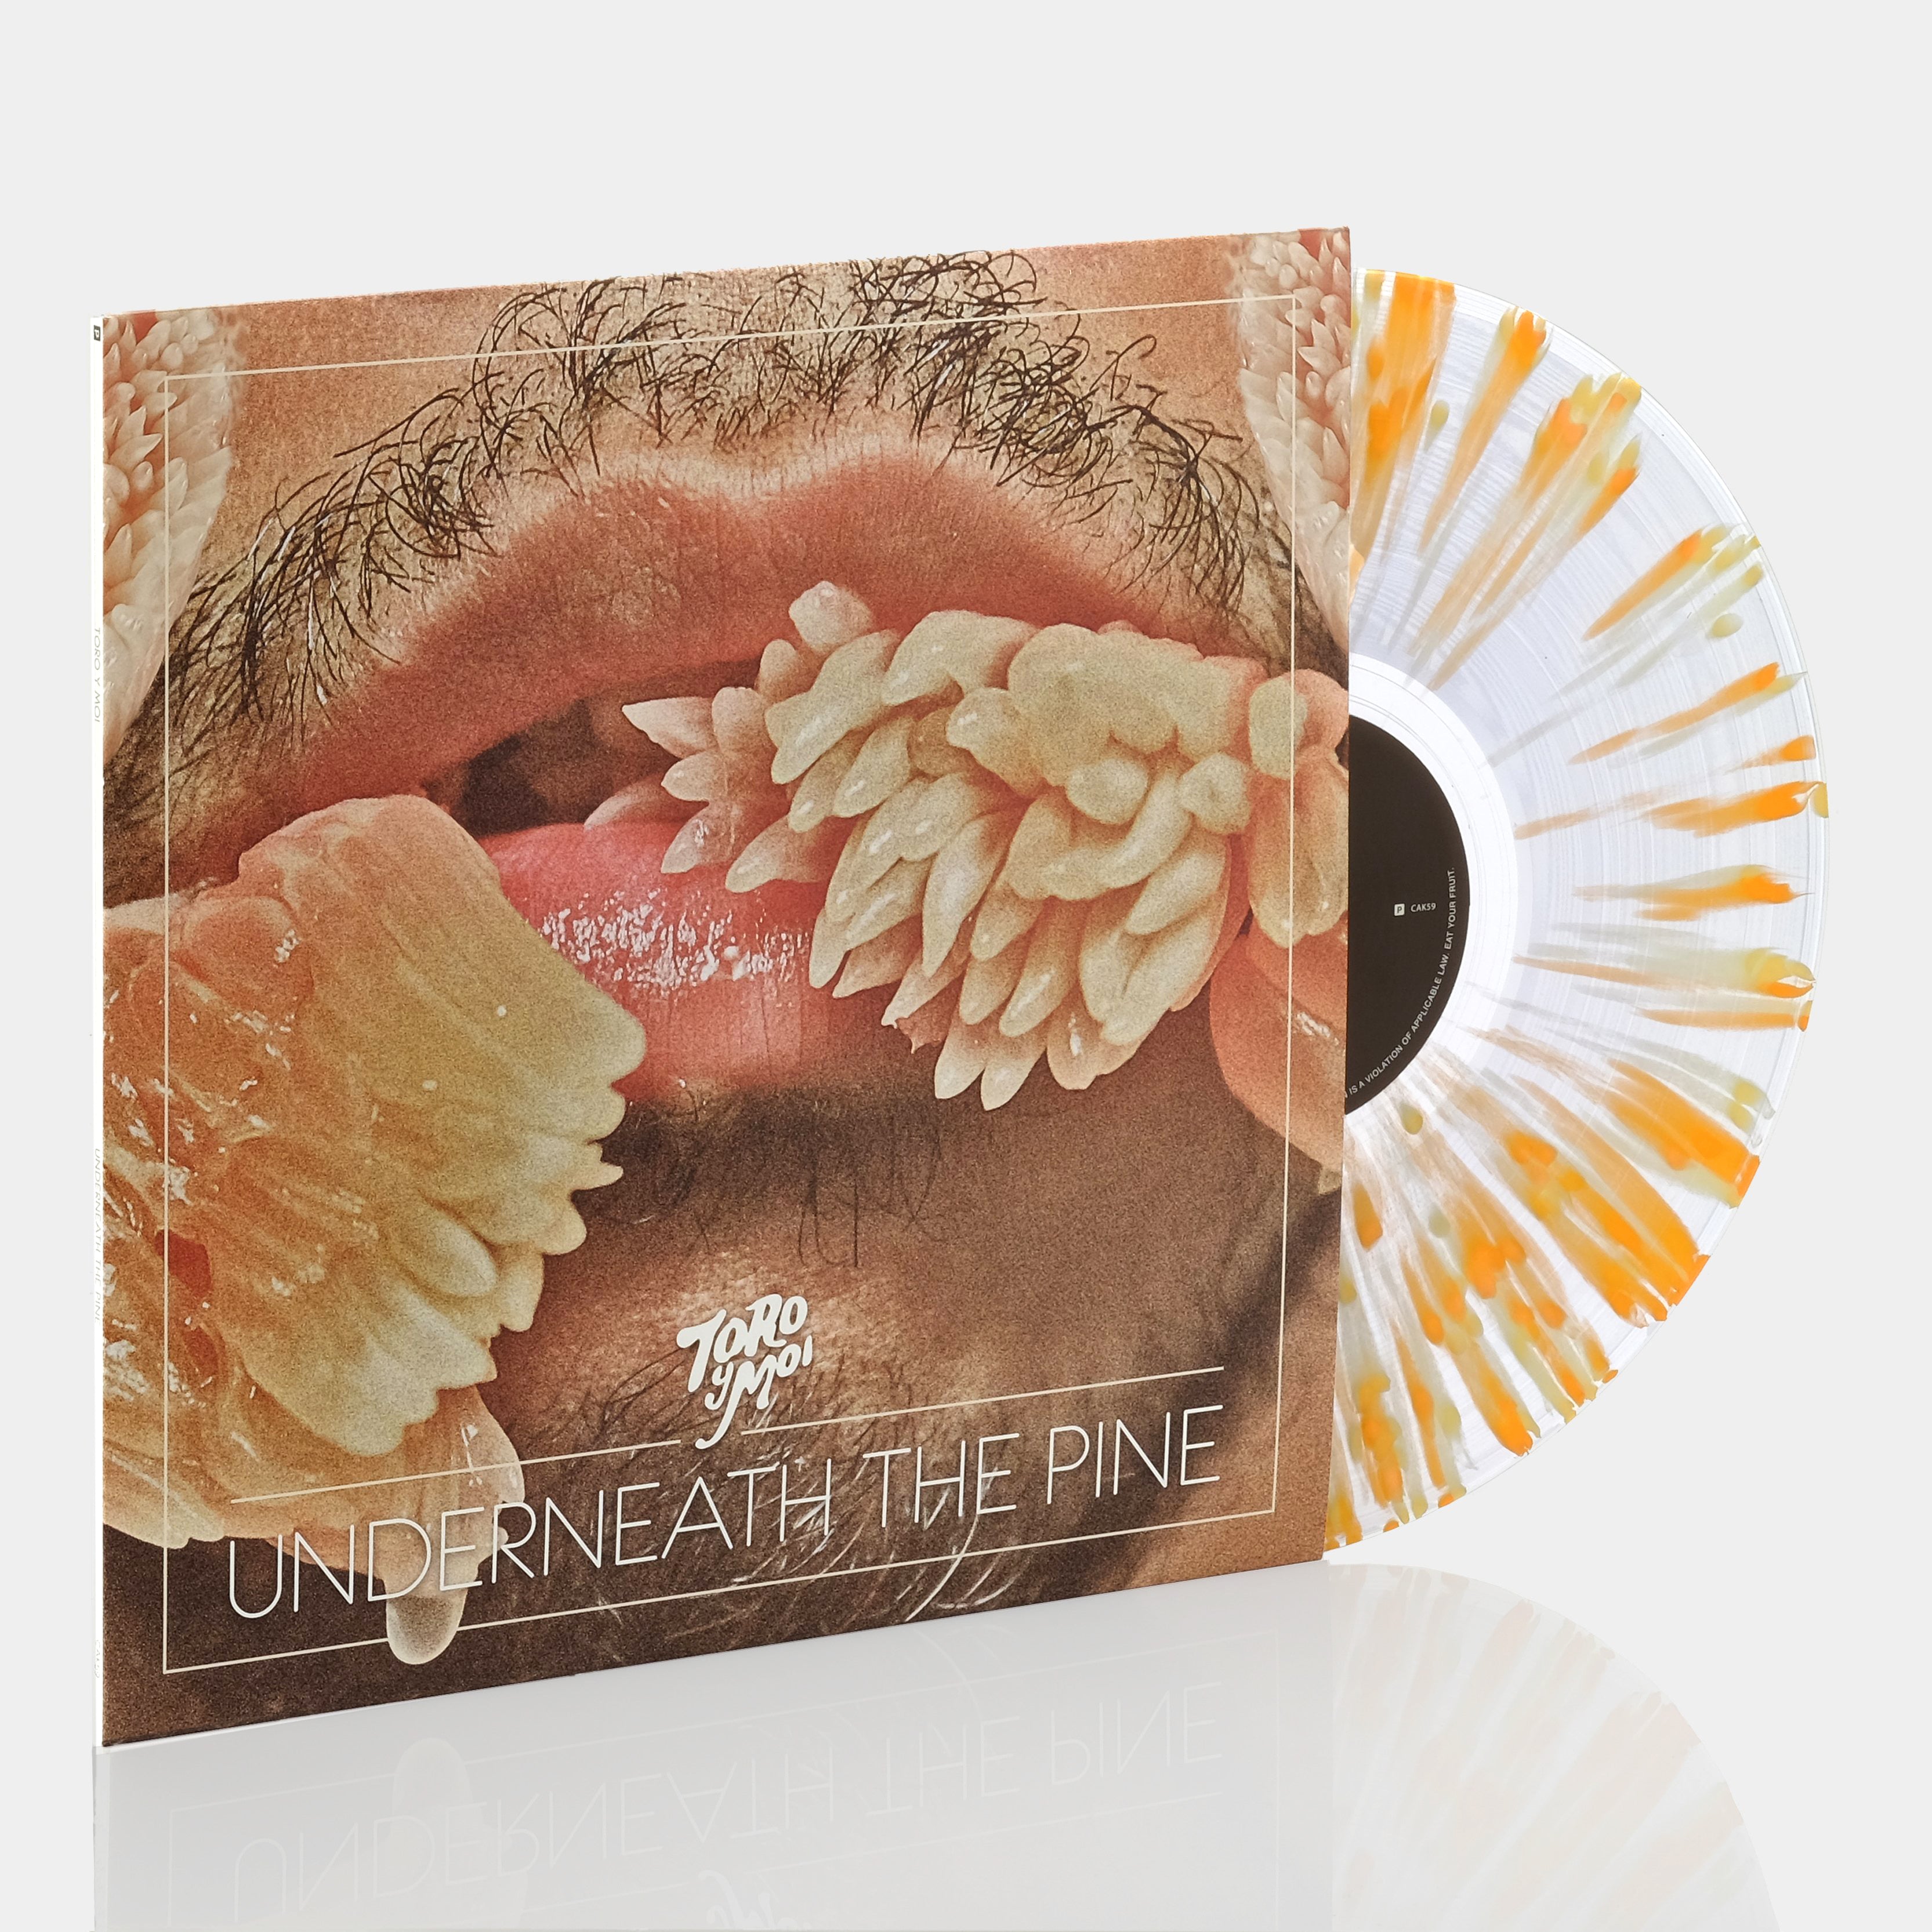 Toro y Moi - Underneath The Pine LP Clear With Yellow & Orange Splatter Vinyl Record